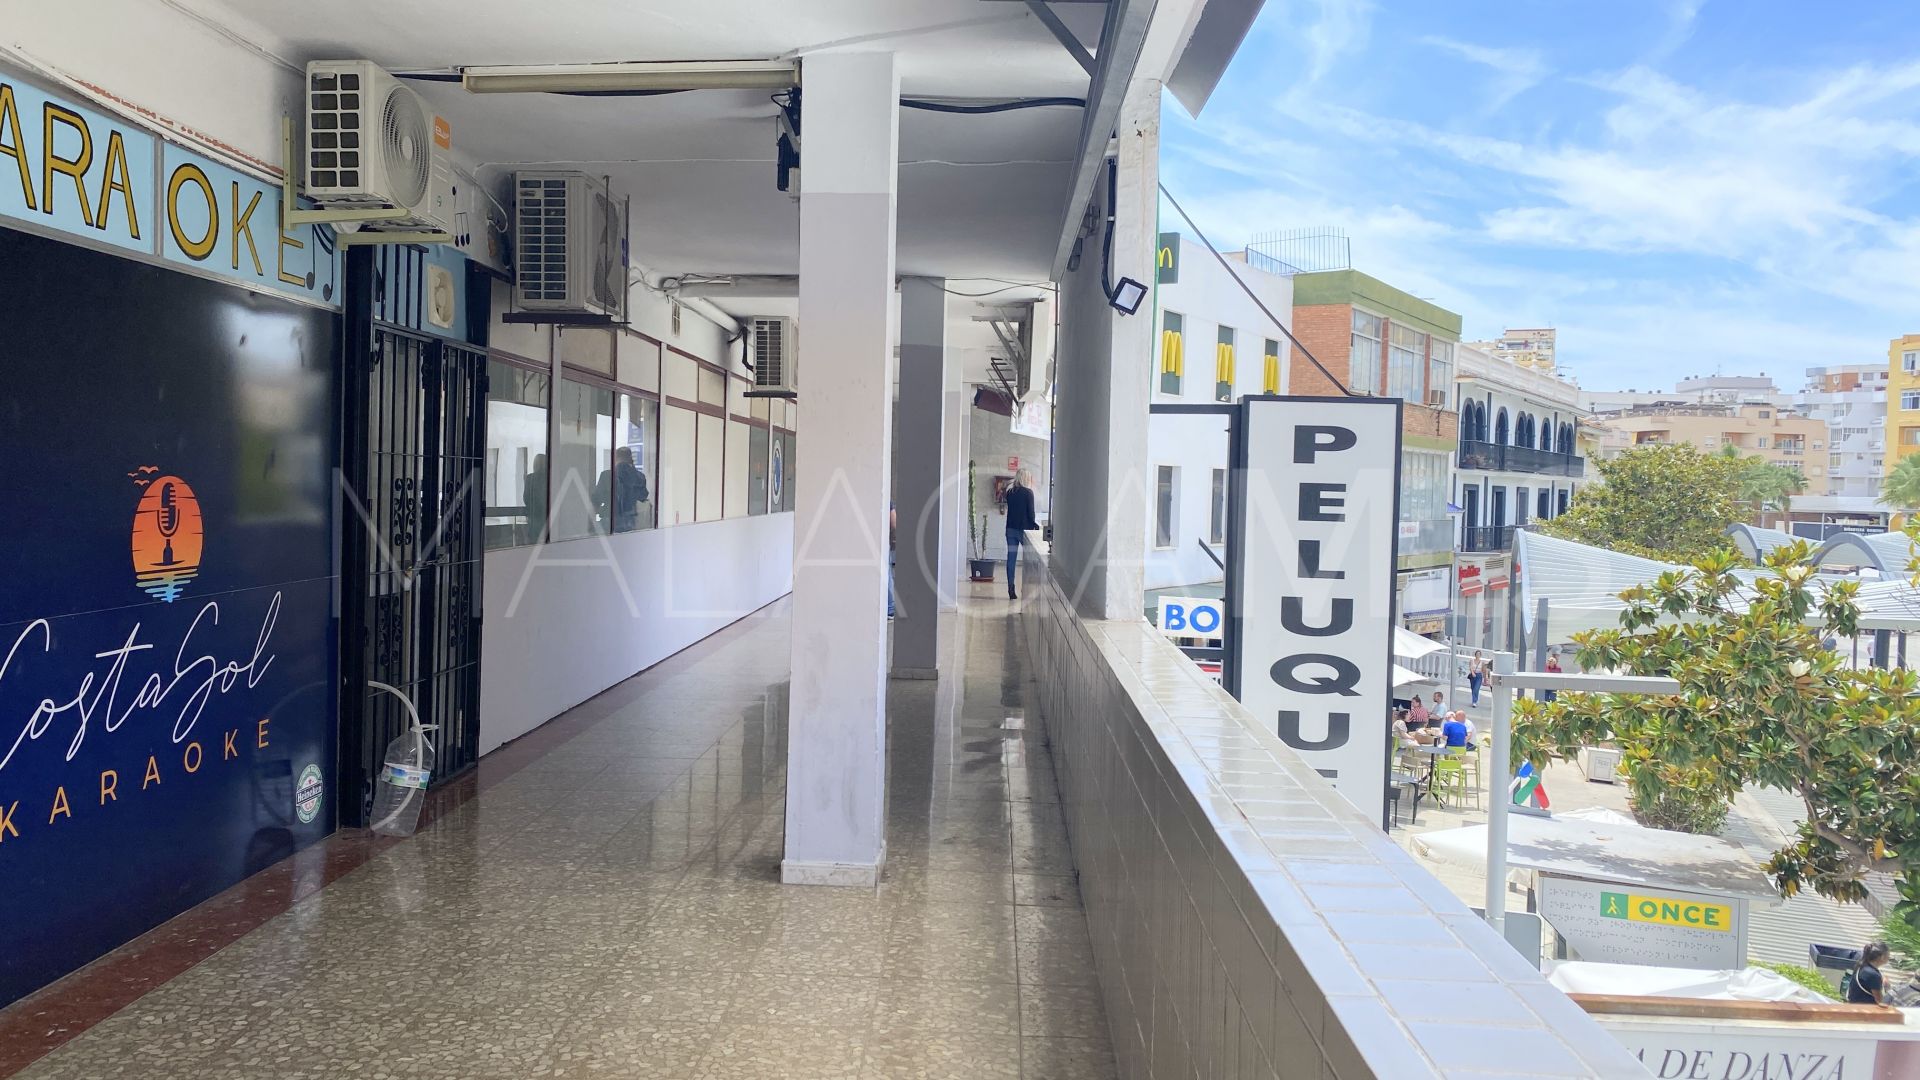 Kontor for sale in Torremolinos Centro